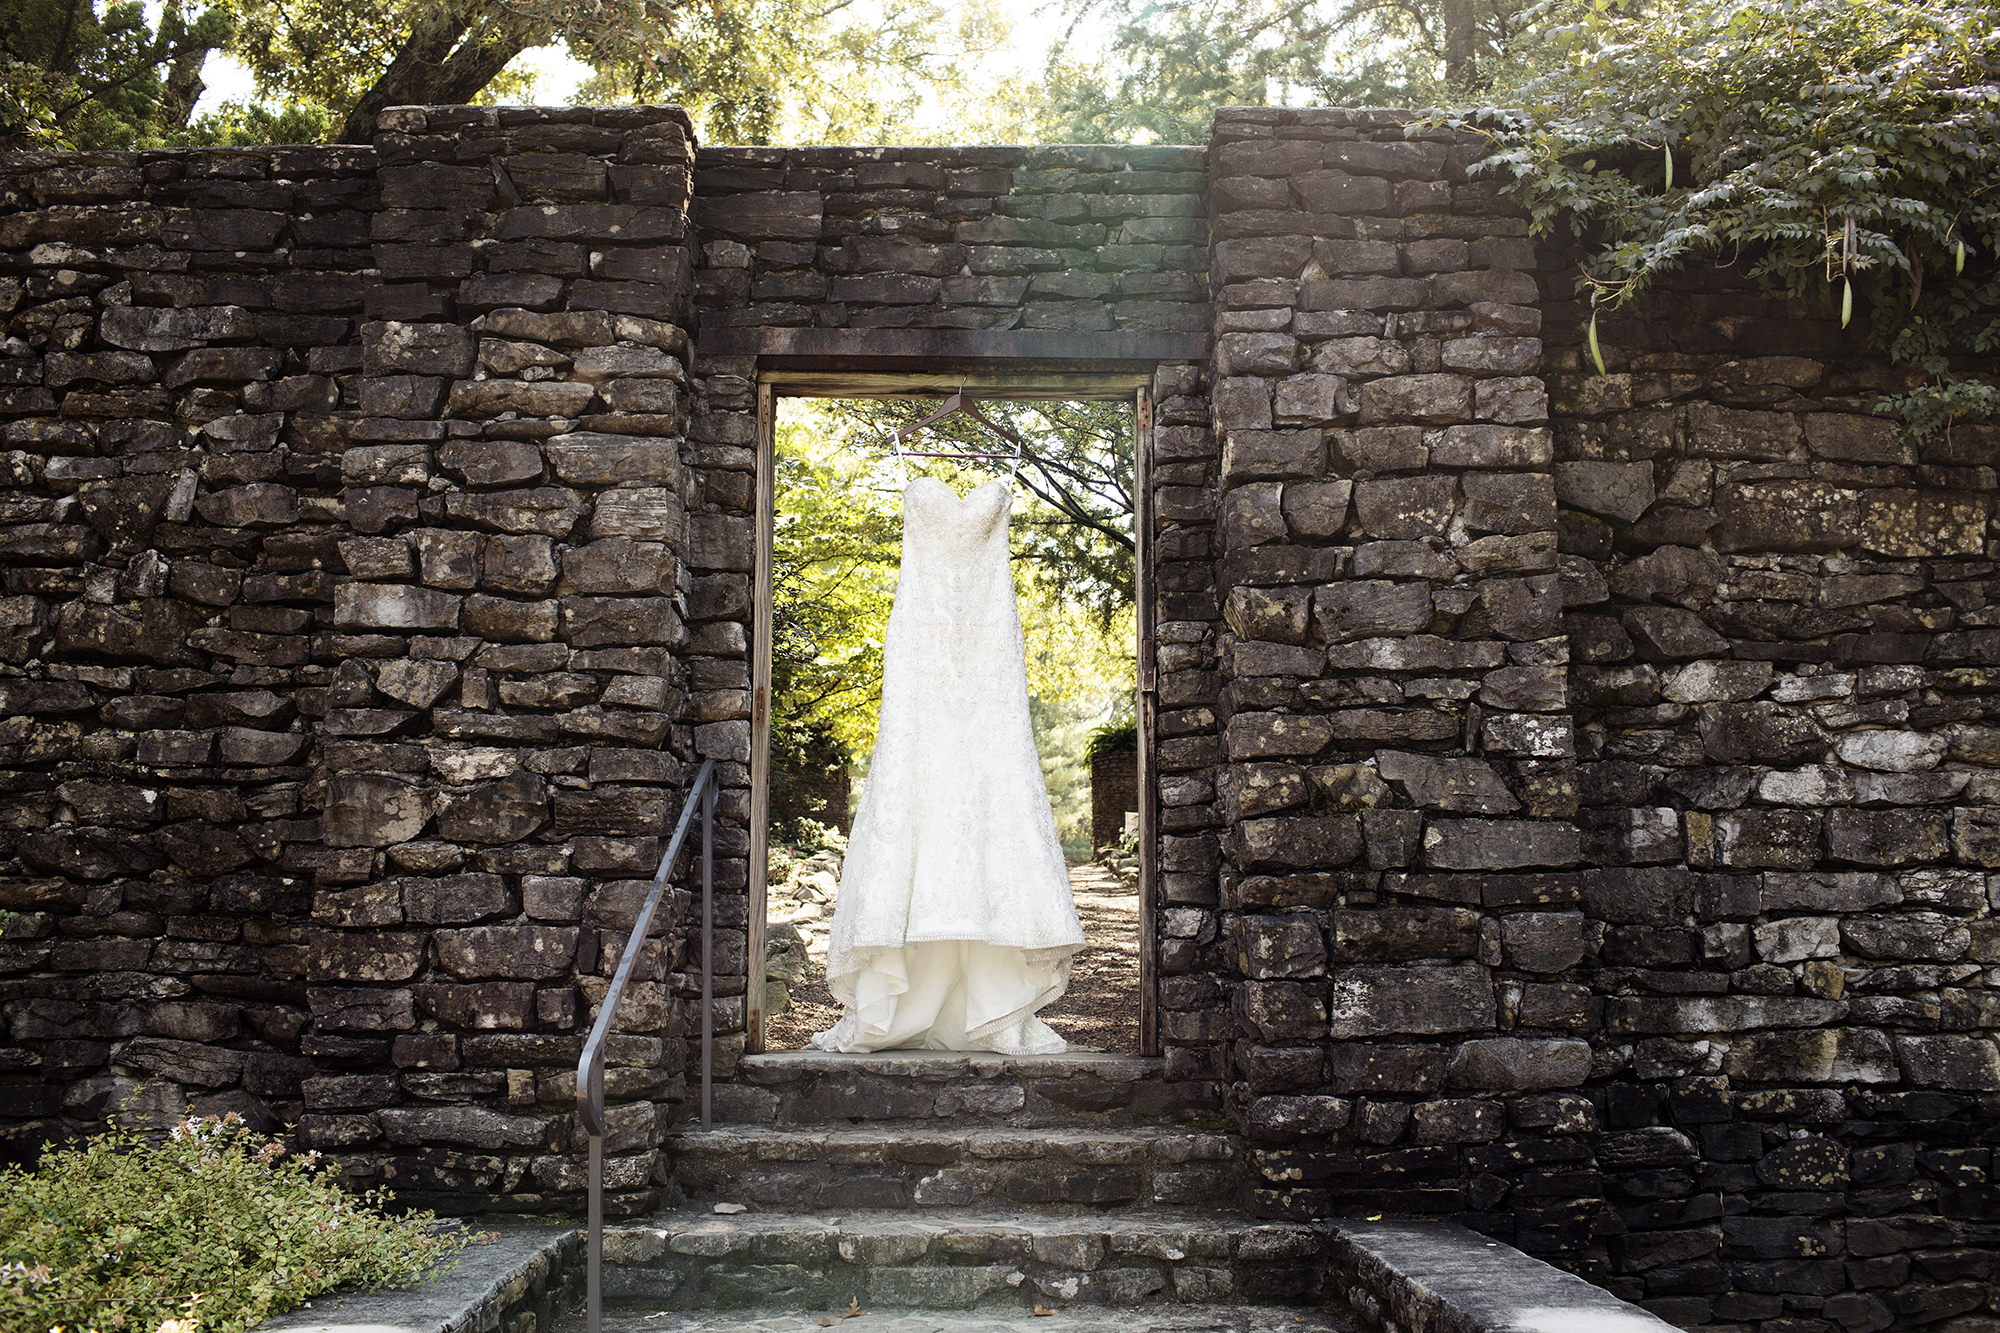 Knoxville, Tennessee Wedding Photos | Destination Wedding Photography by Photogen Inc. | Eliesa Johnson | Based in Minneapolis, Minnesota